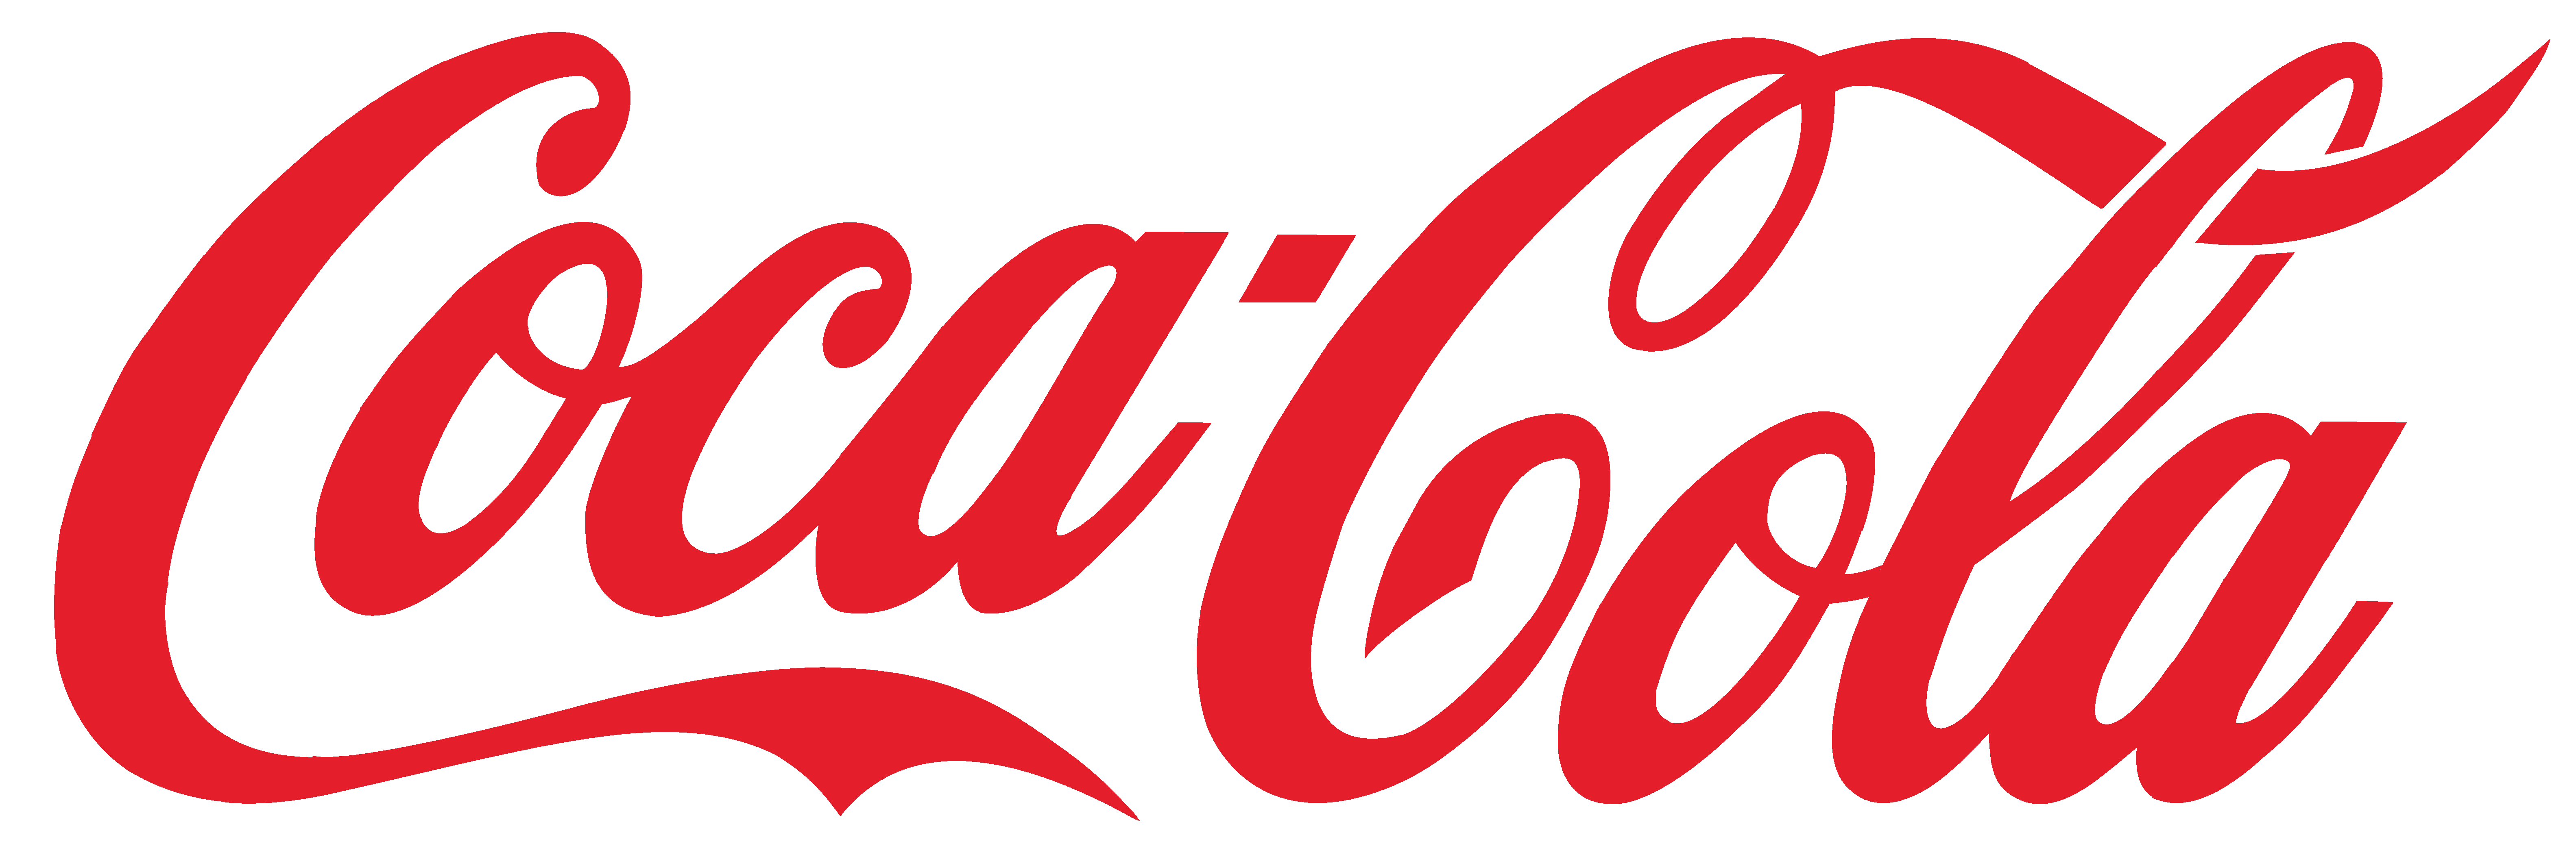 Coca Cola Wallpaper For Pc 4k Download - Wallpaperforu